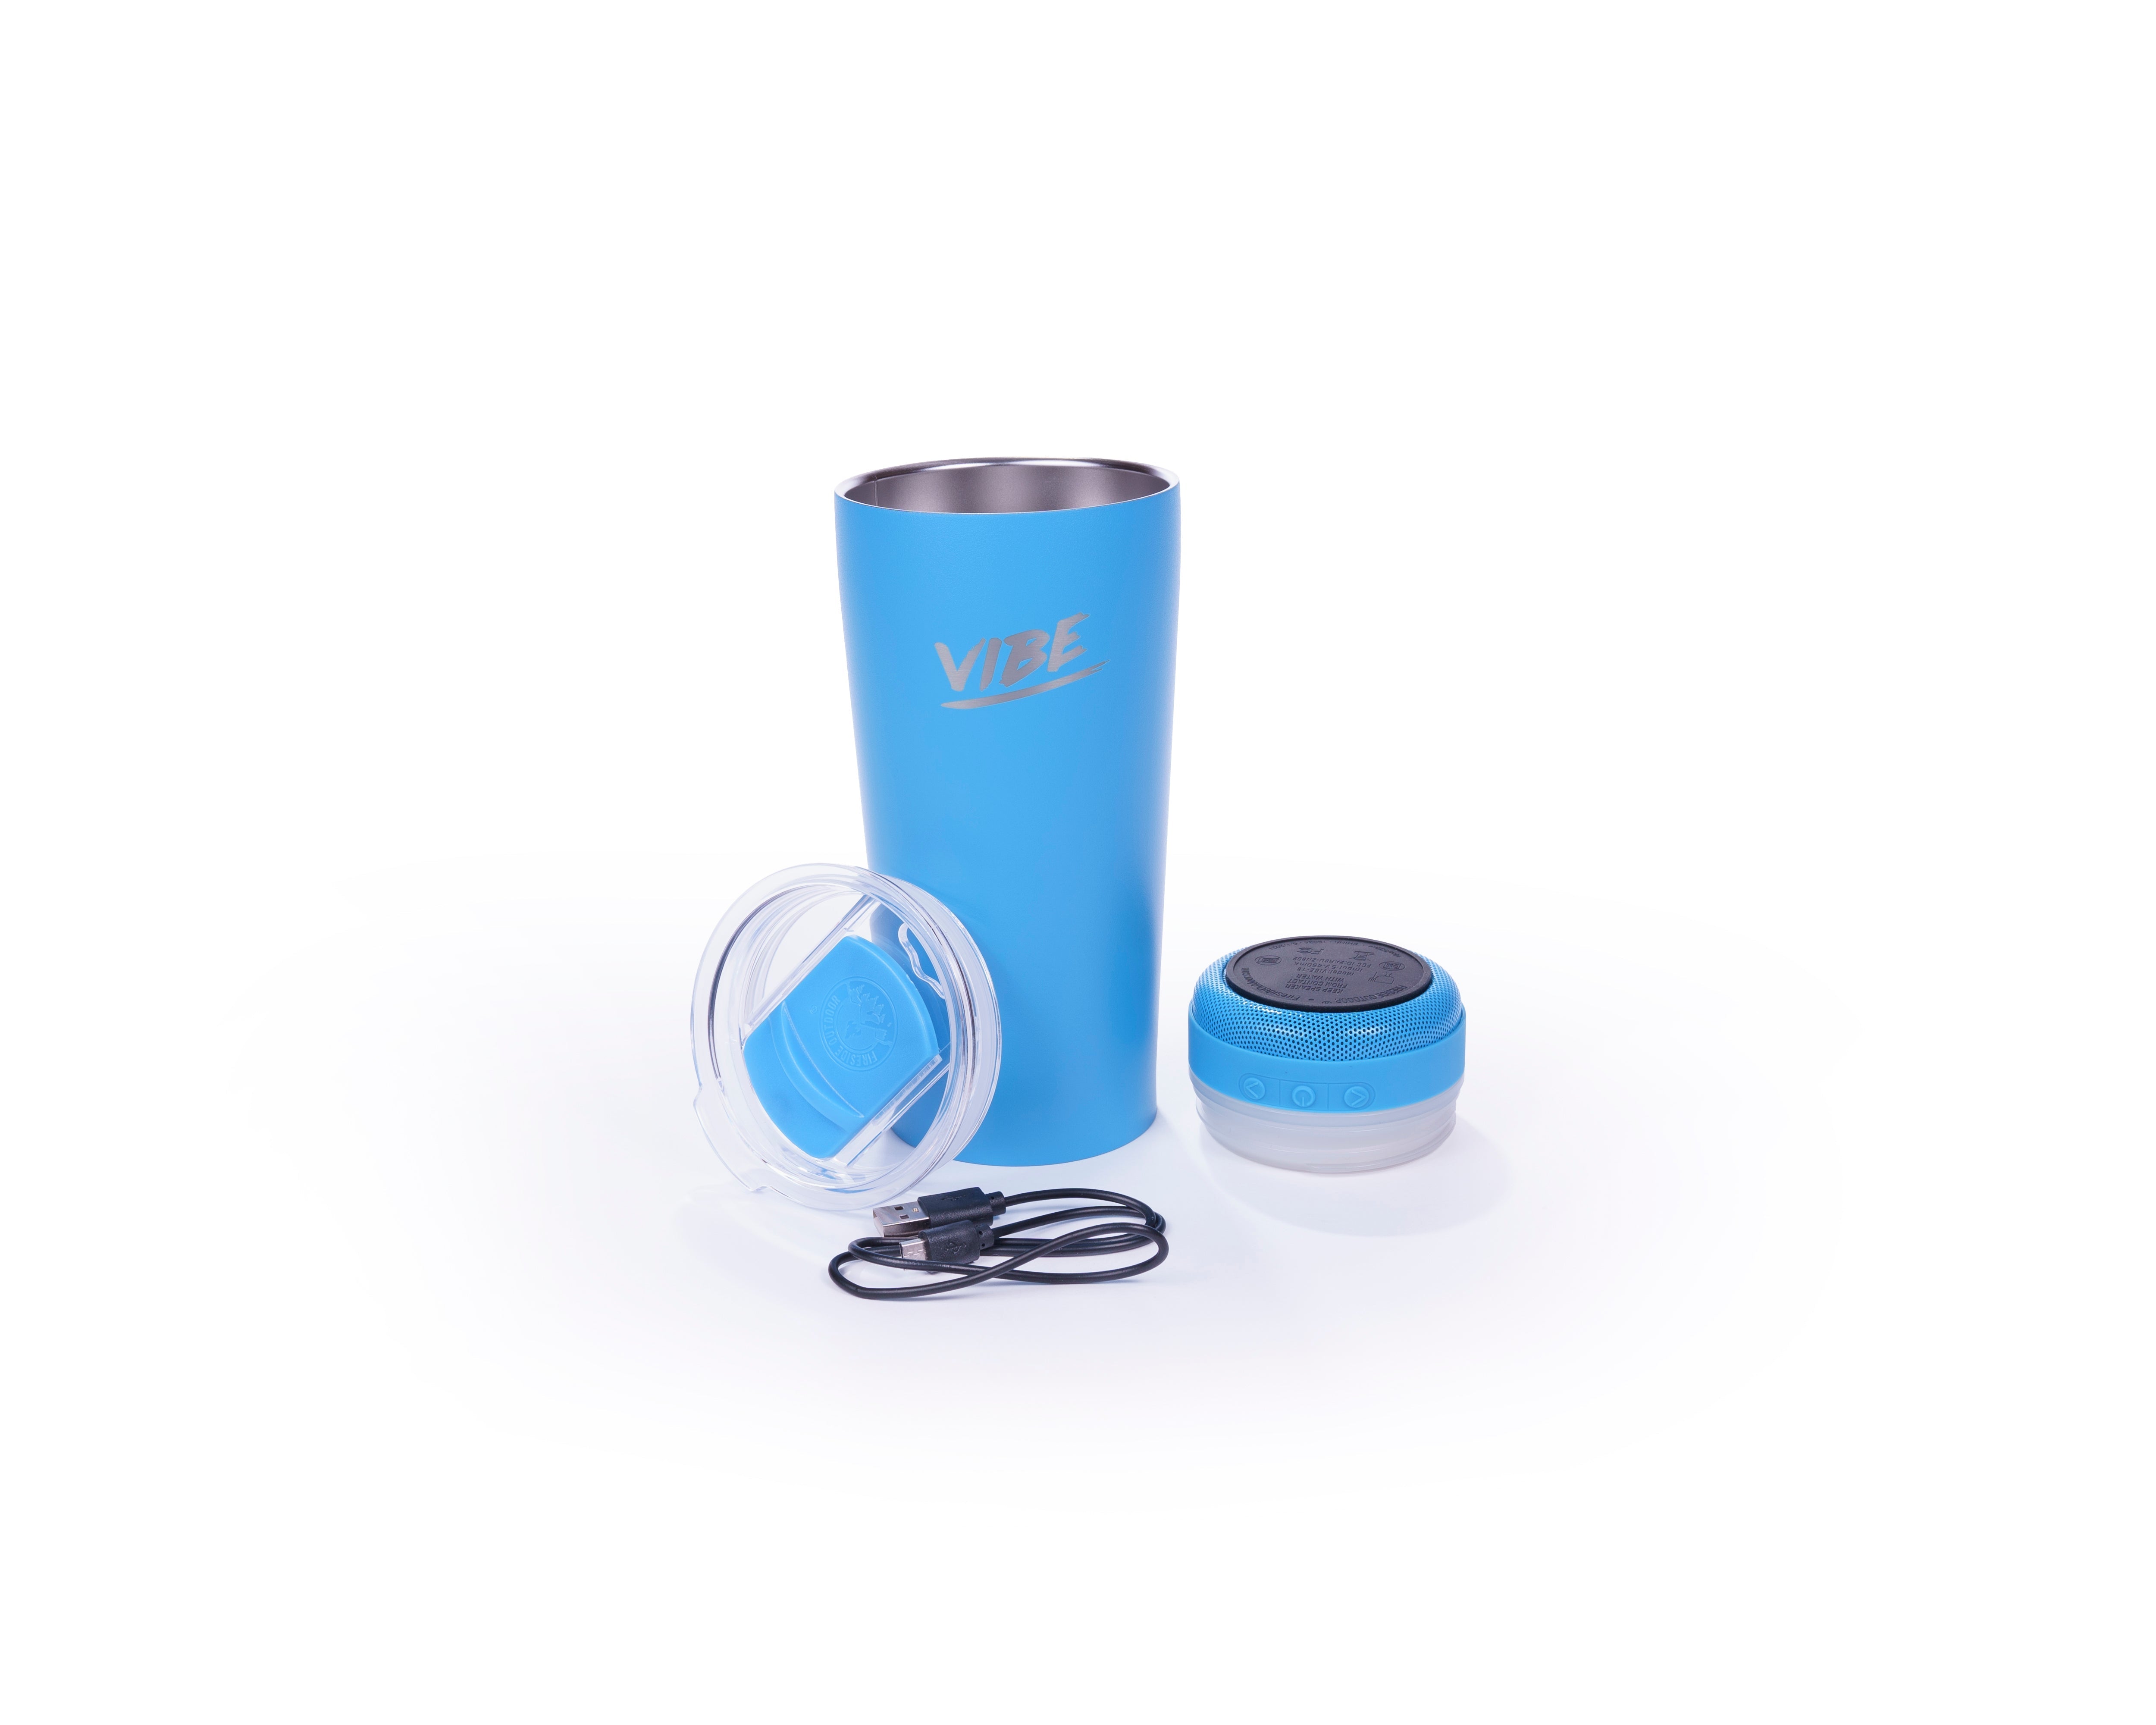 Vibe 18oz Tumbler with Bluetooth Speaker